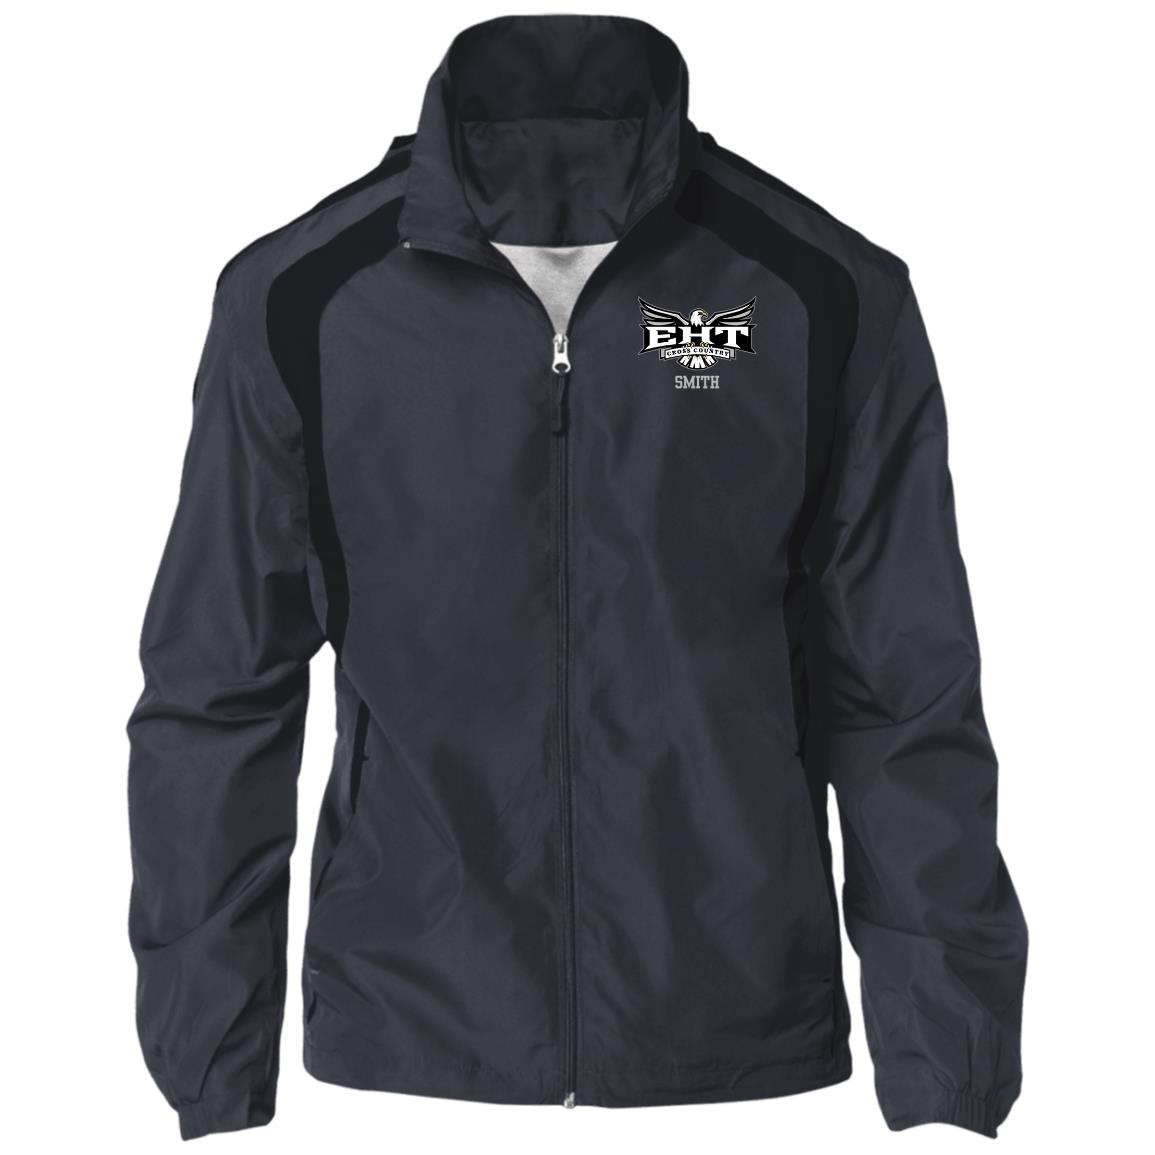 EHT XC Jersey-Lined Raglan Jacket